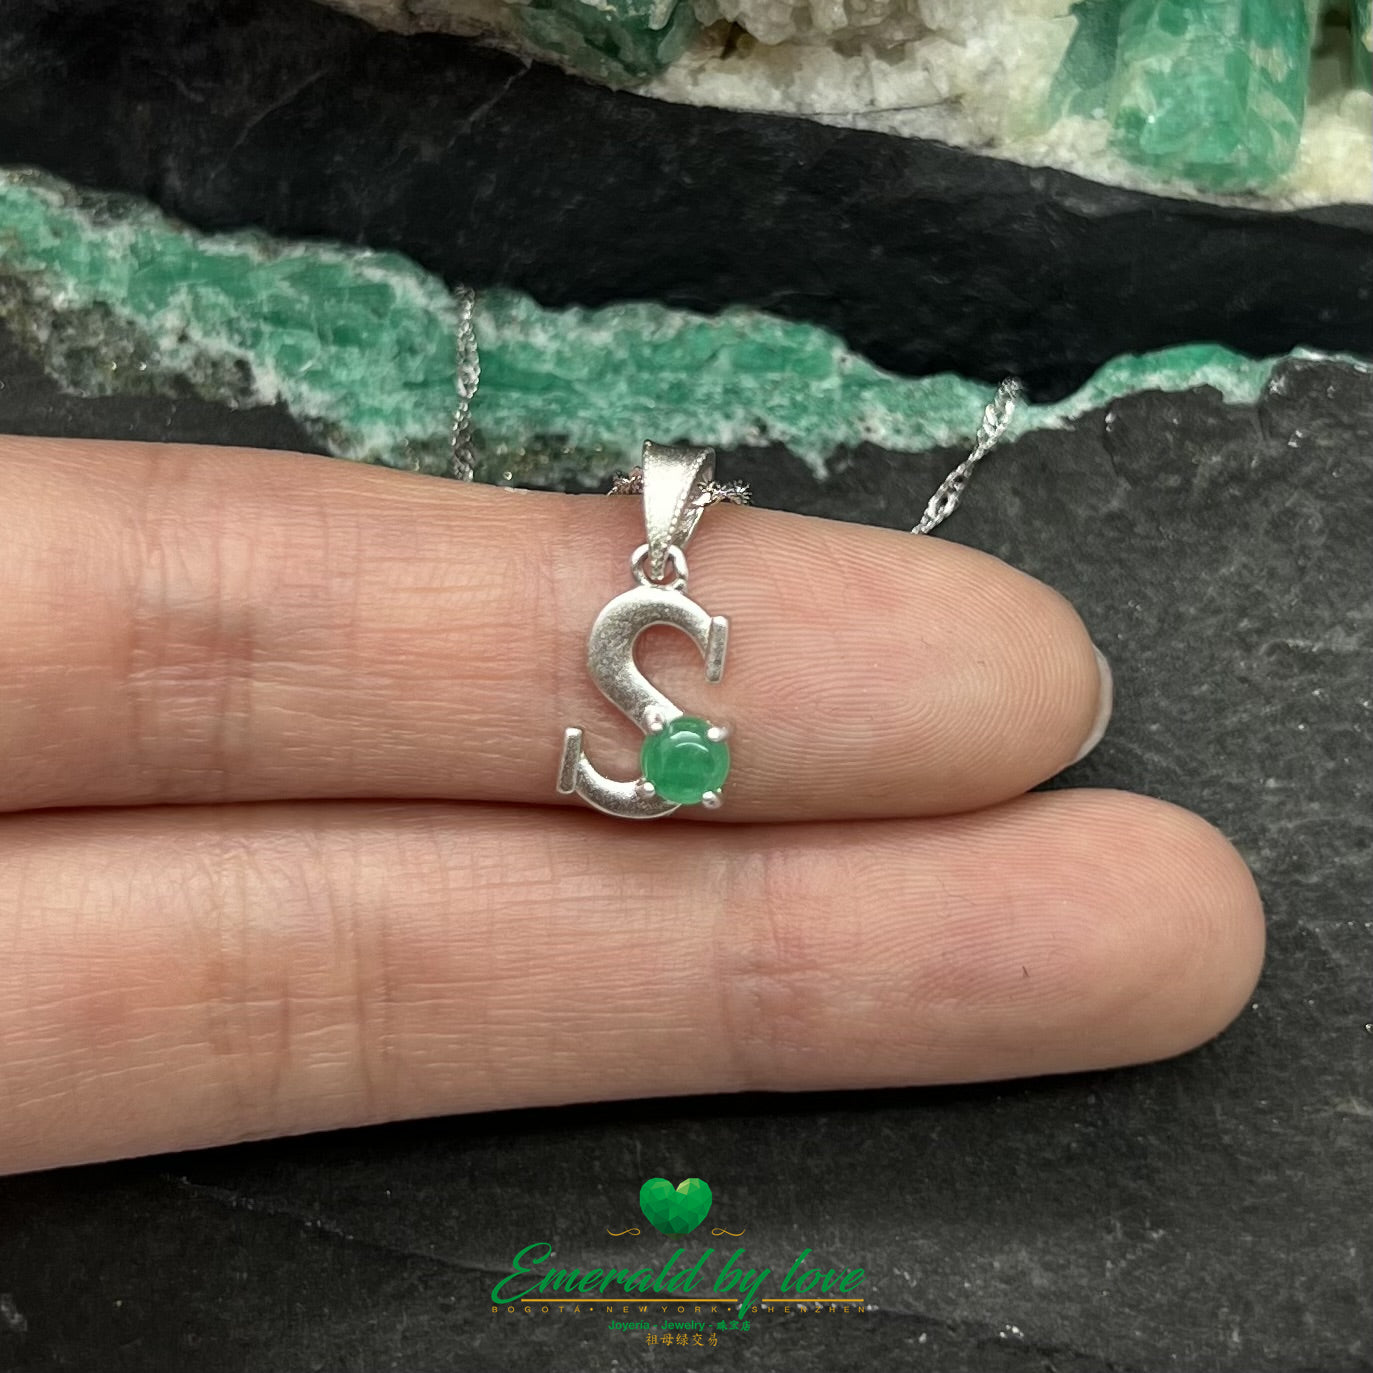 Silver Letter S Pendant with Dark Green Round Cabochon Emerald